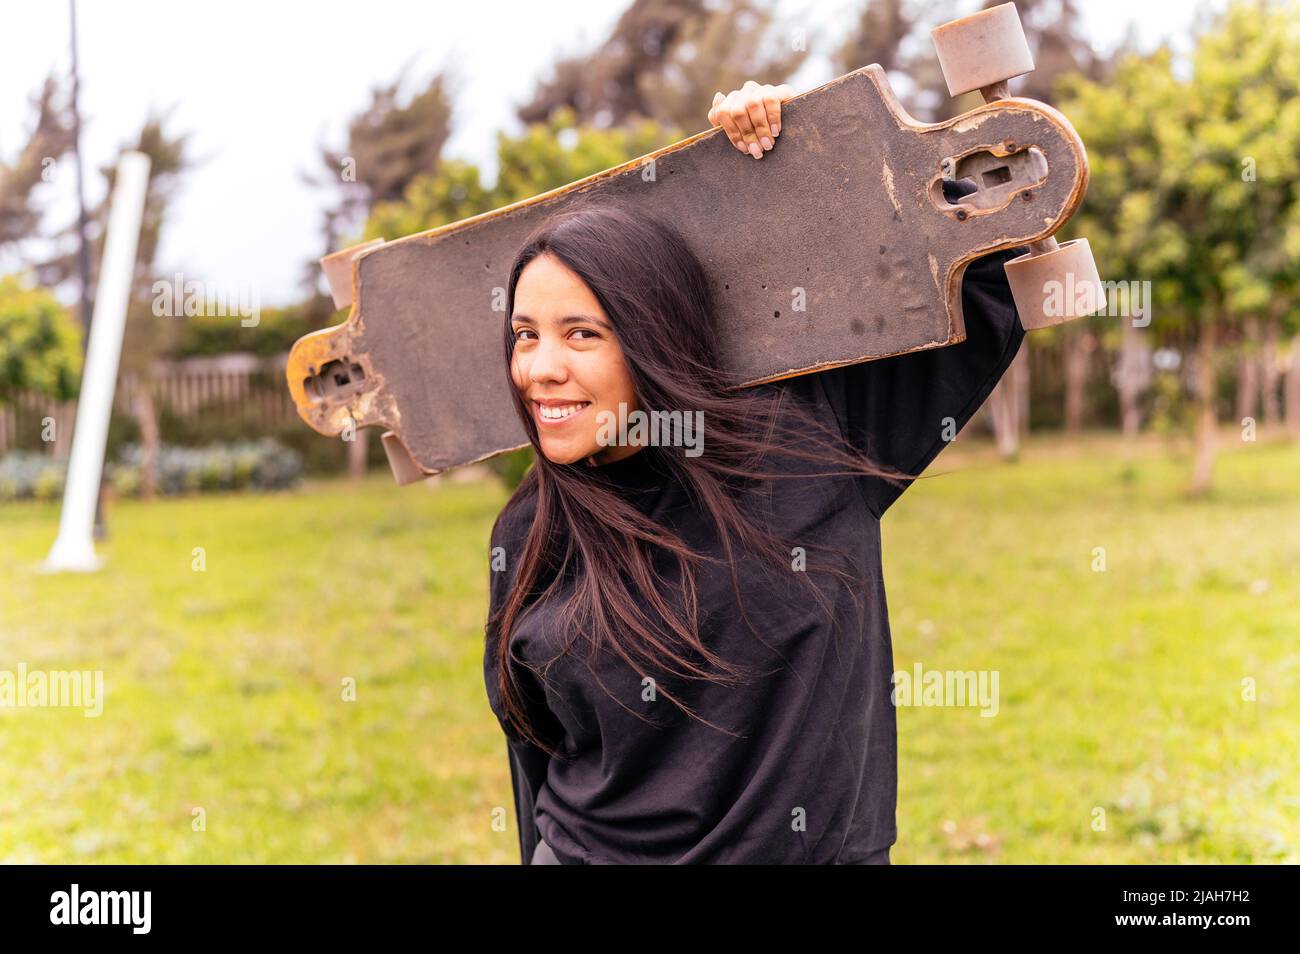 Portrait of smiling young female skateboarder holding her skateboard Stock Photo